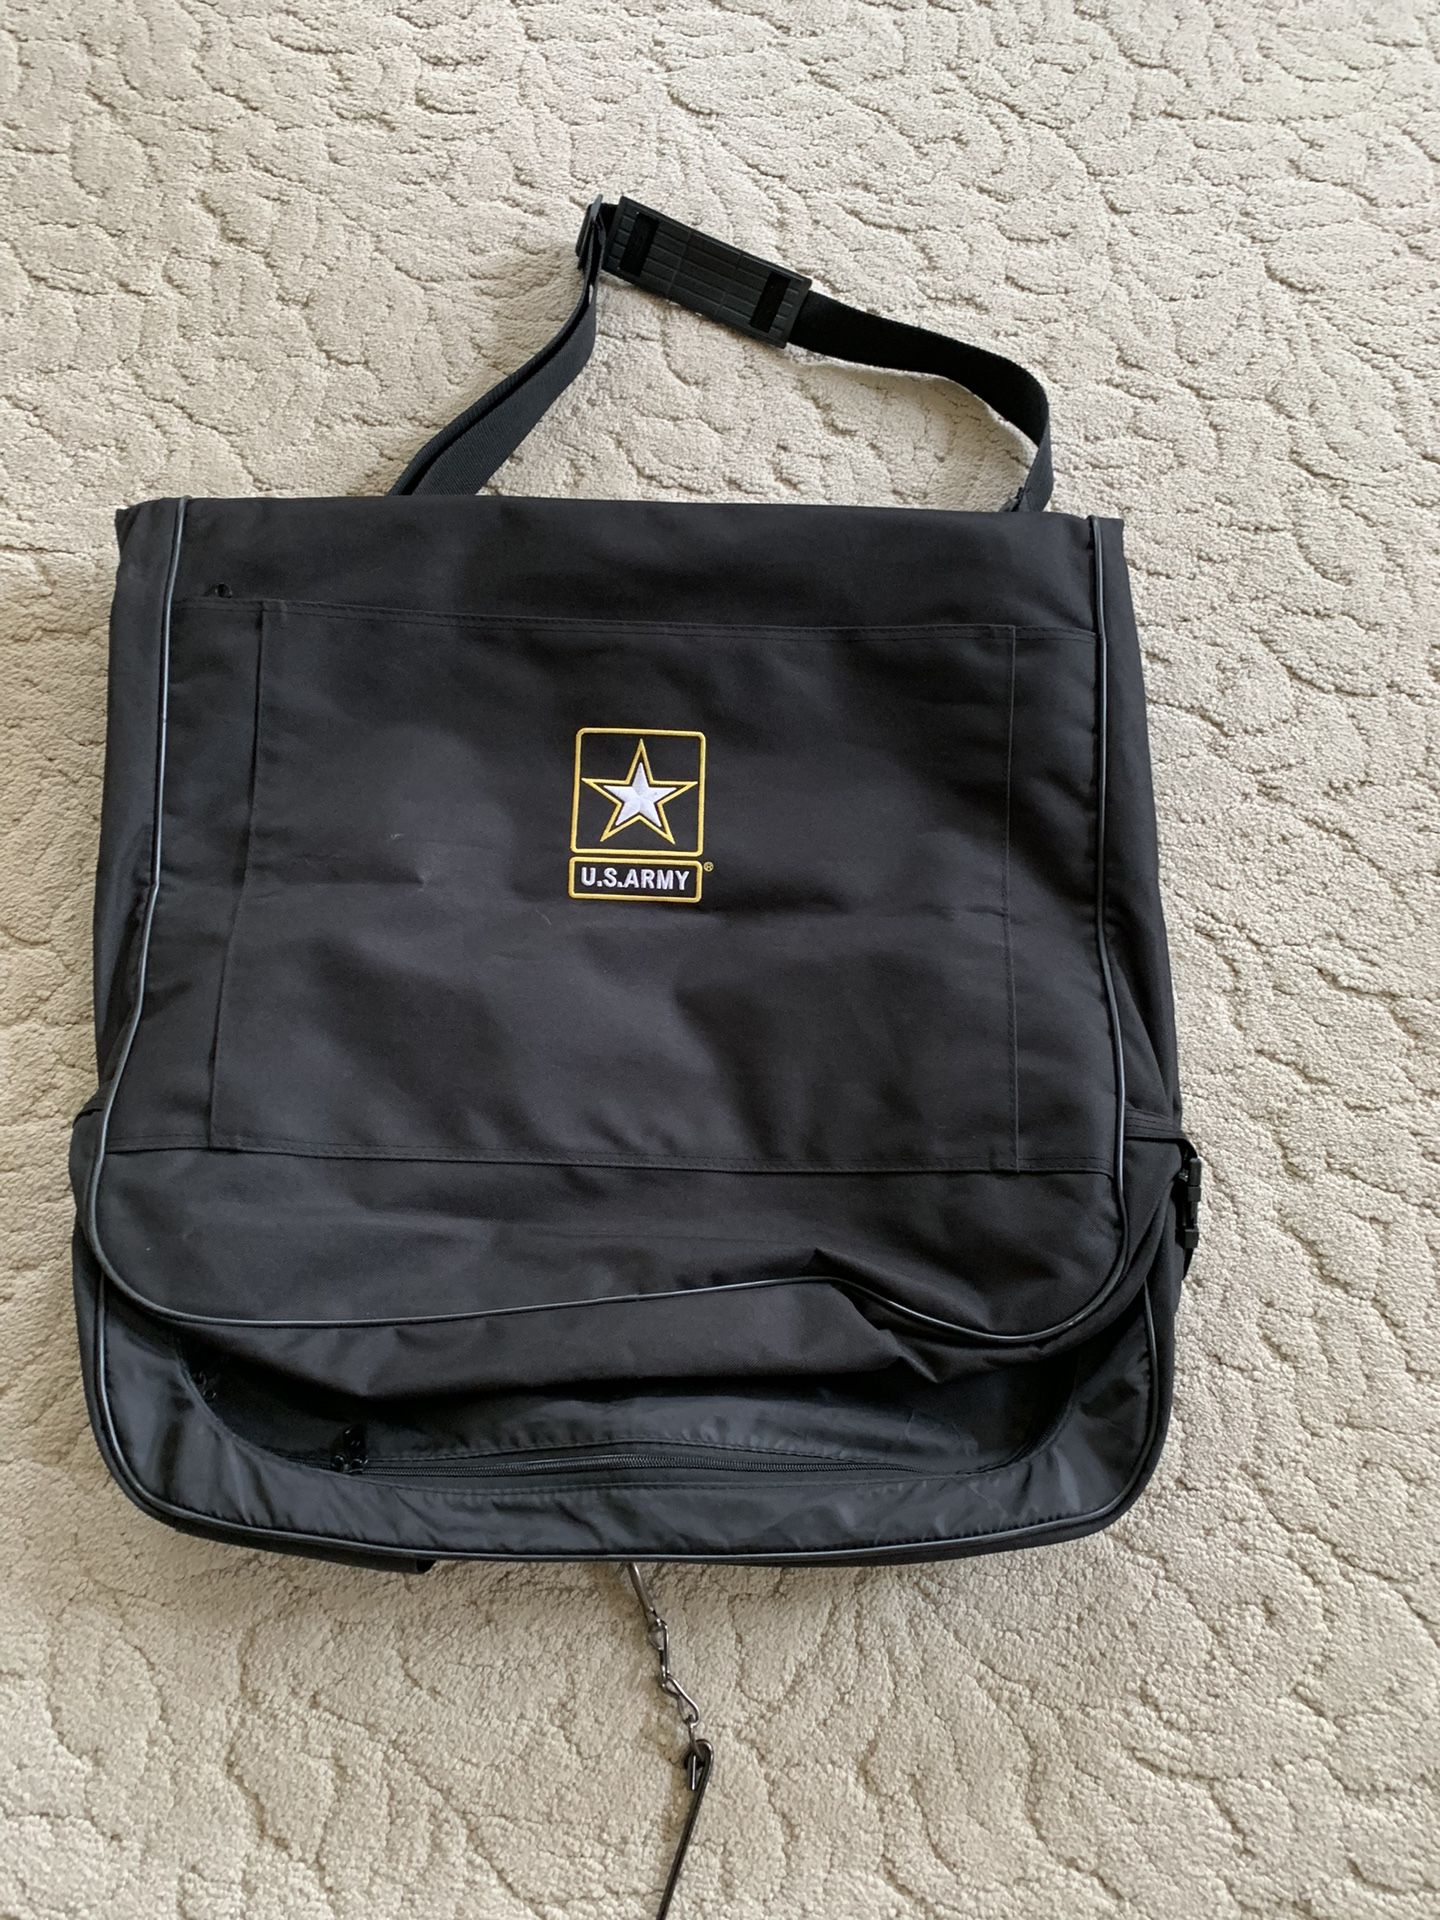 Army garment bag